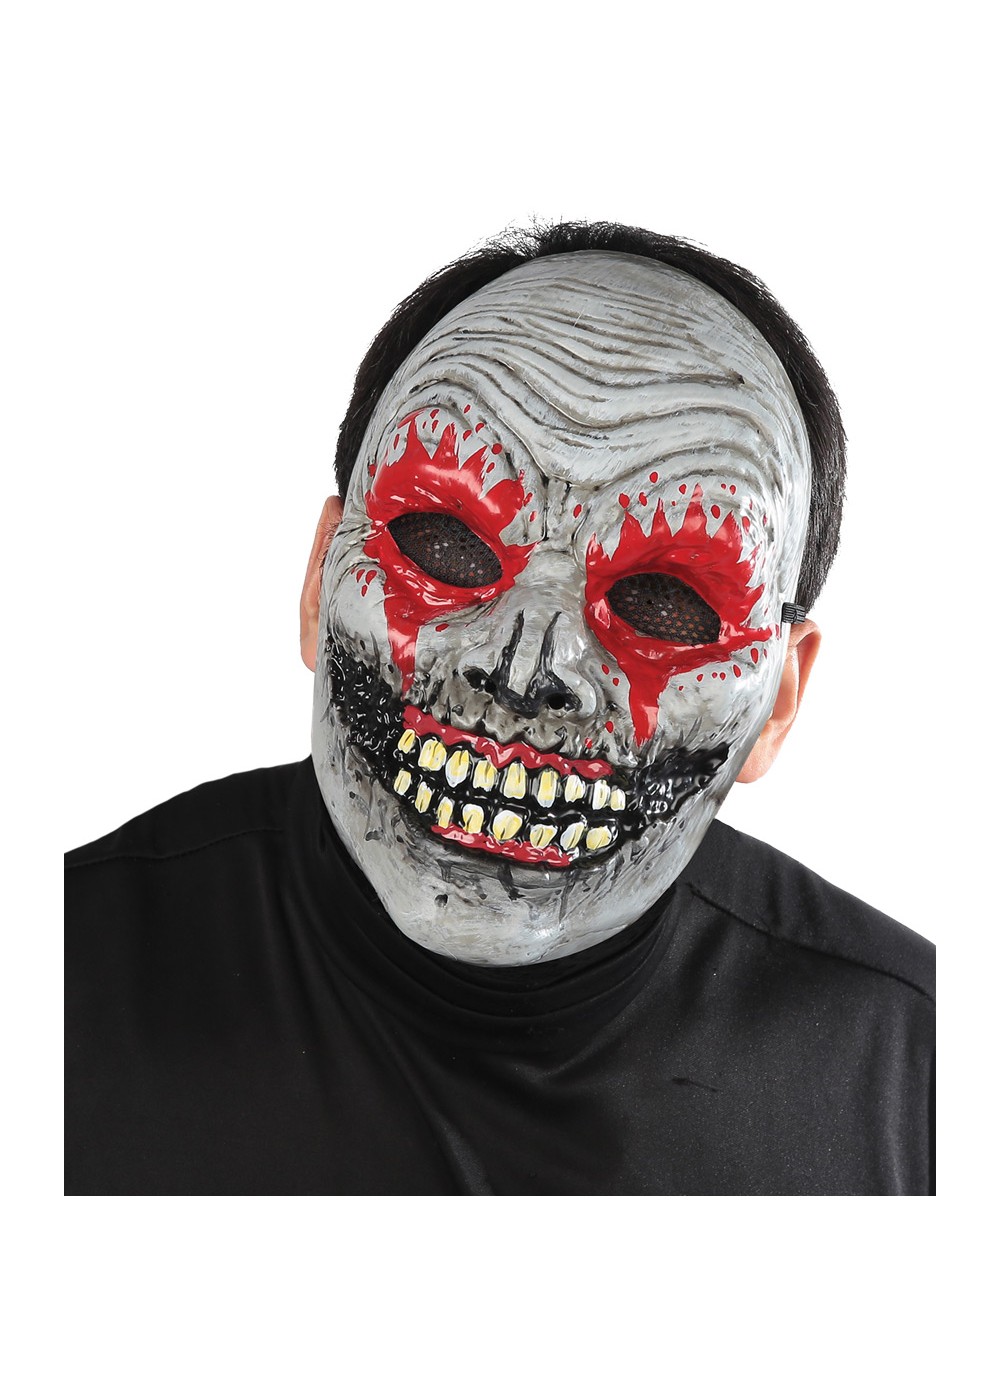 Eyeless Rotting Clown Mask